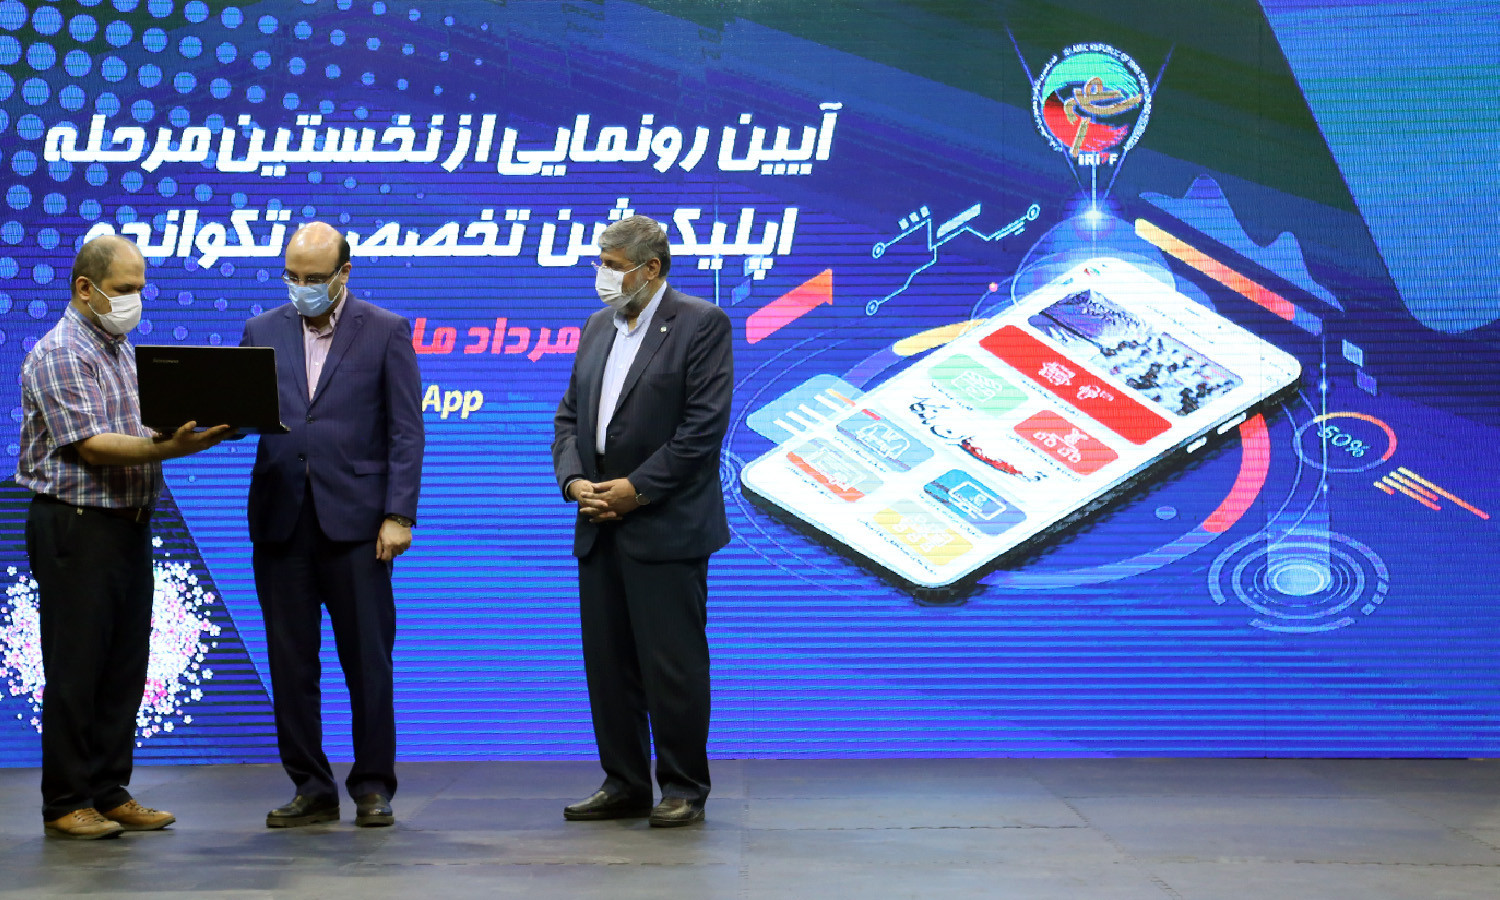 Iran Taekwondo Federation launches mobile app